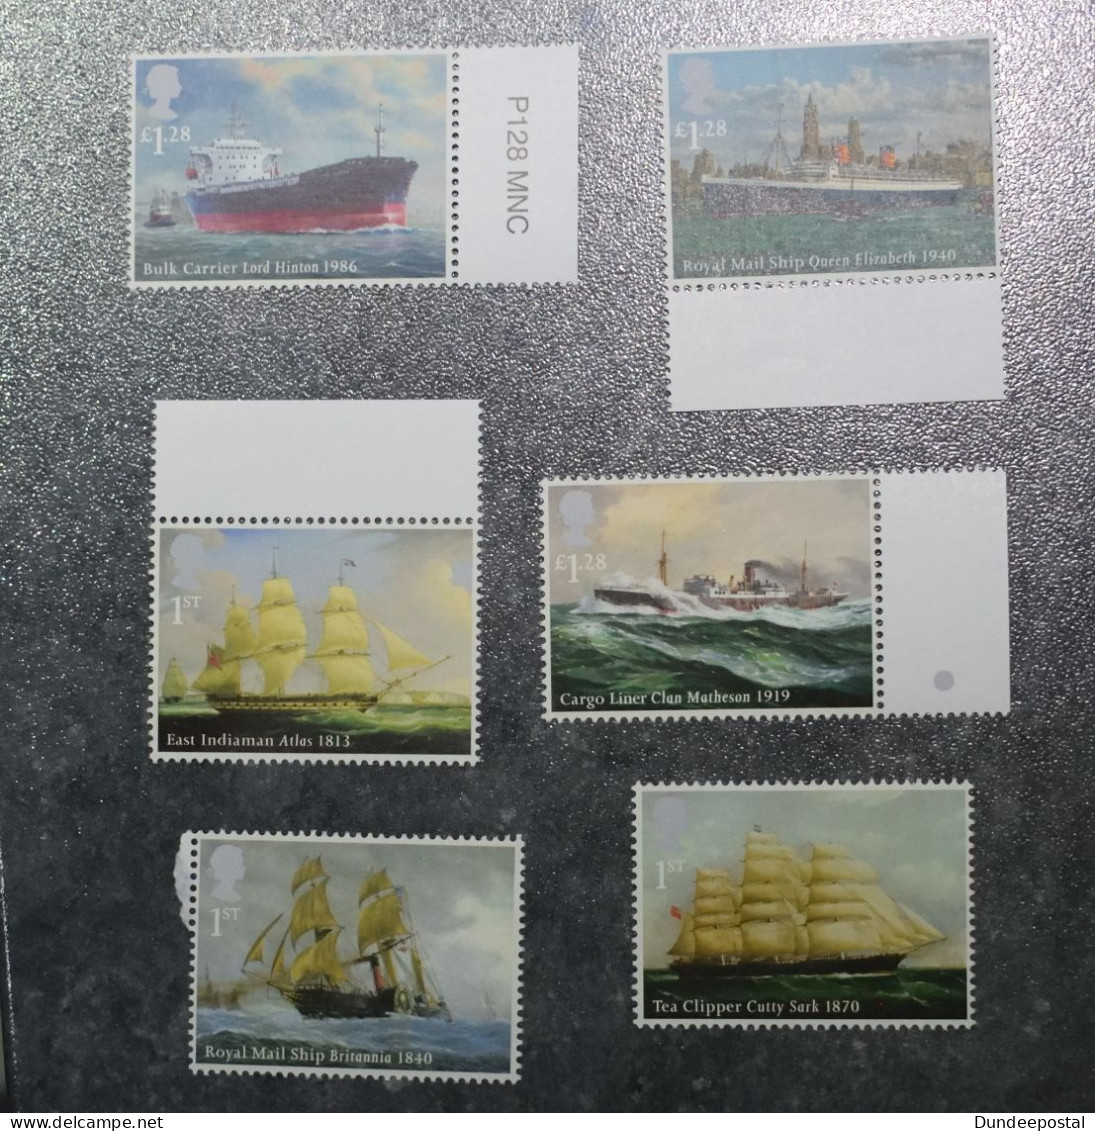 GB  STAMPS Merchant Navy Ships  Set  Sept. 2013  MNH  ~~L@@K~~ - Unused Stamps